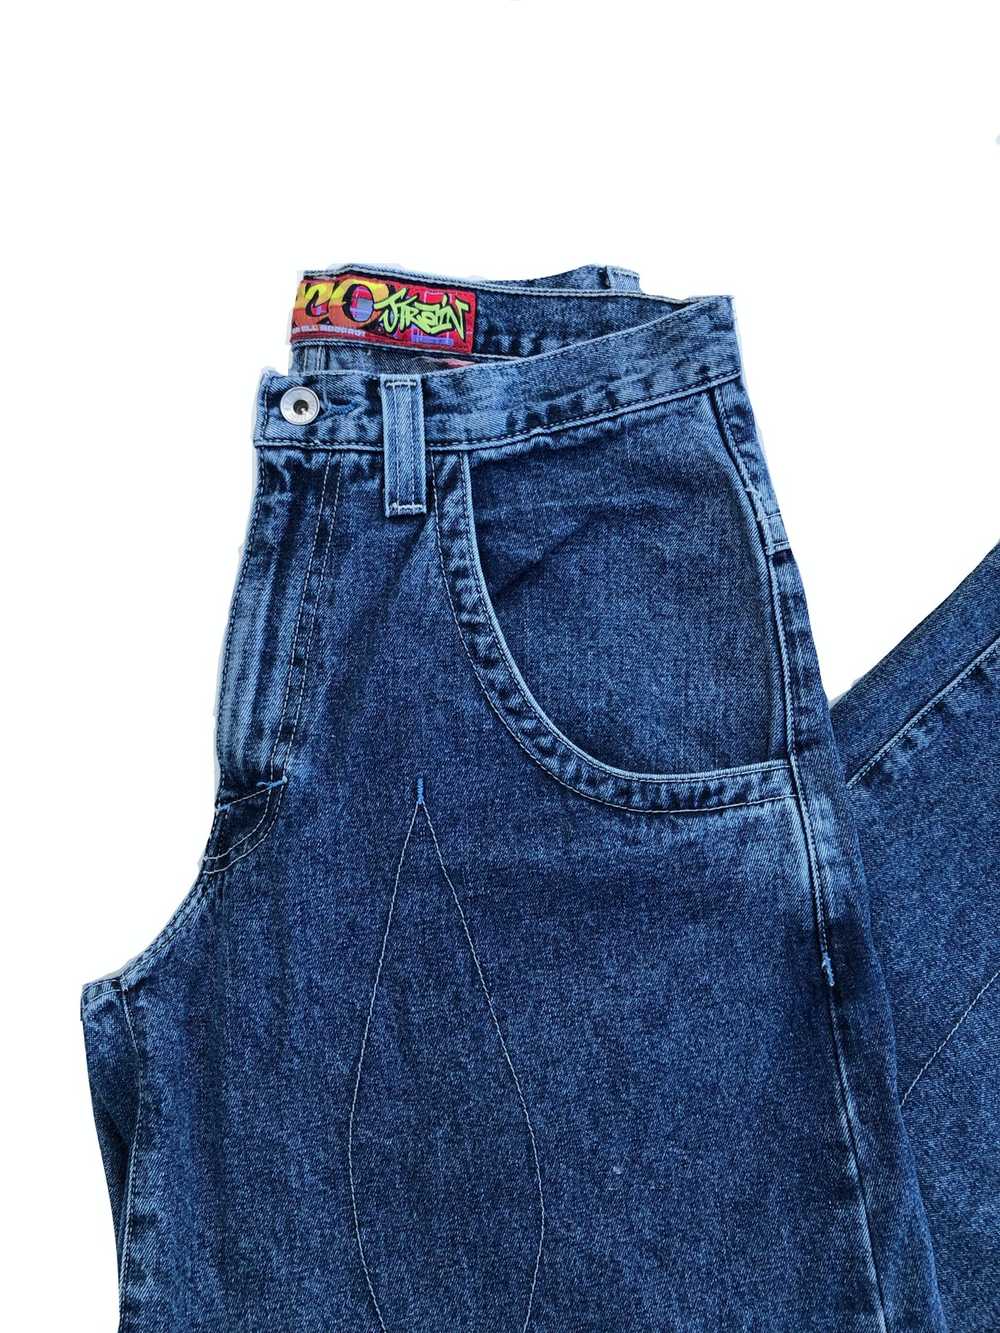 Jnco true vintage 90s JNCO jeans 🔥🔥 - image 2